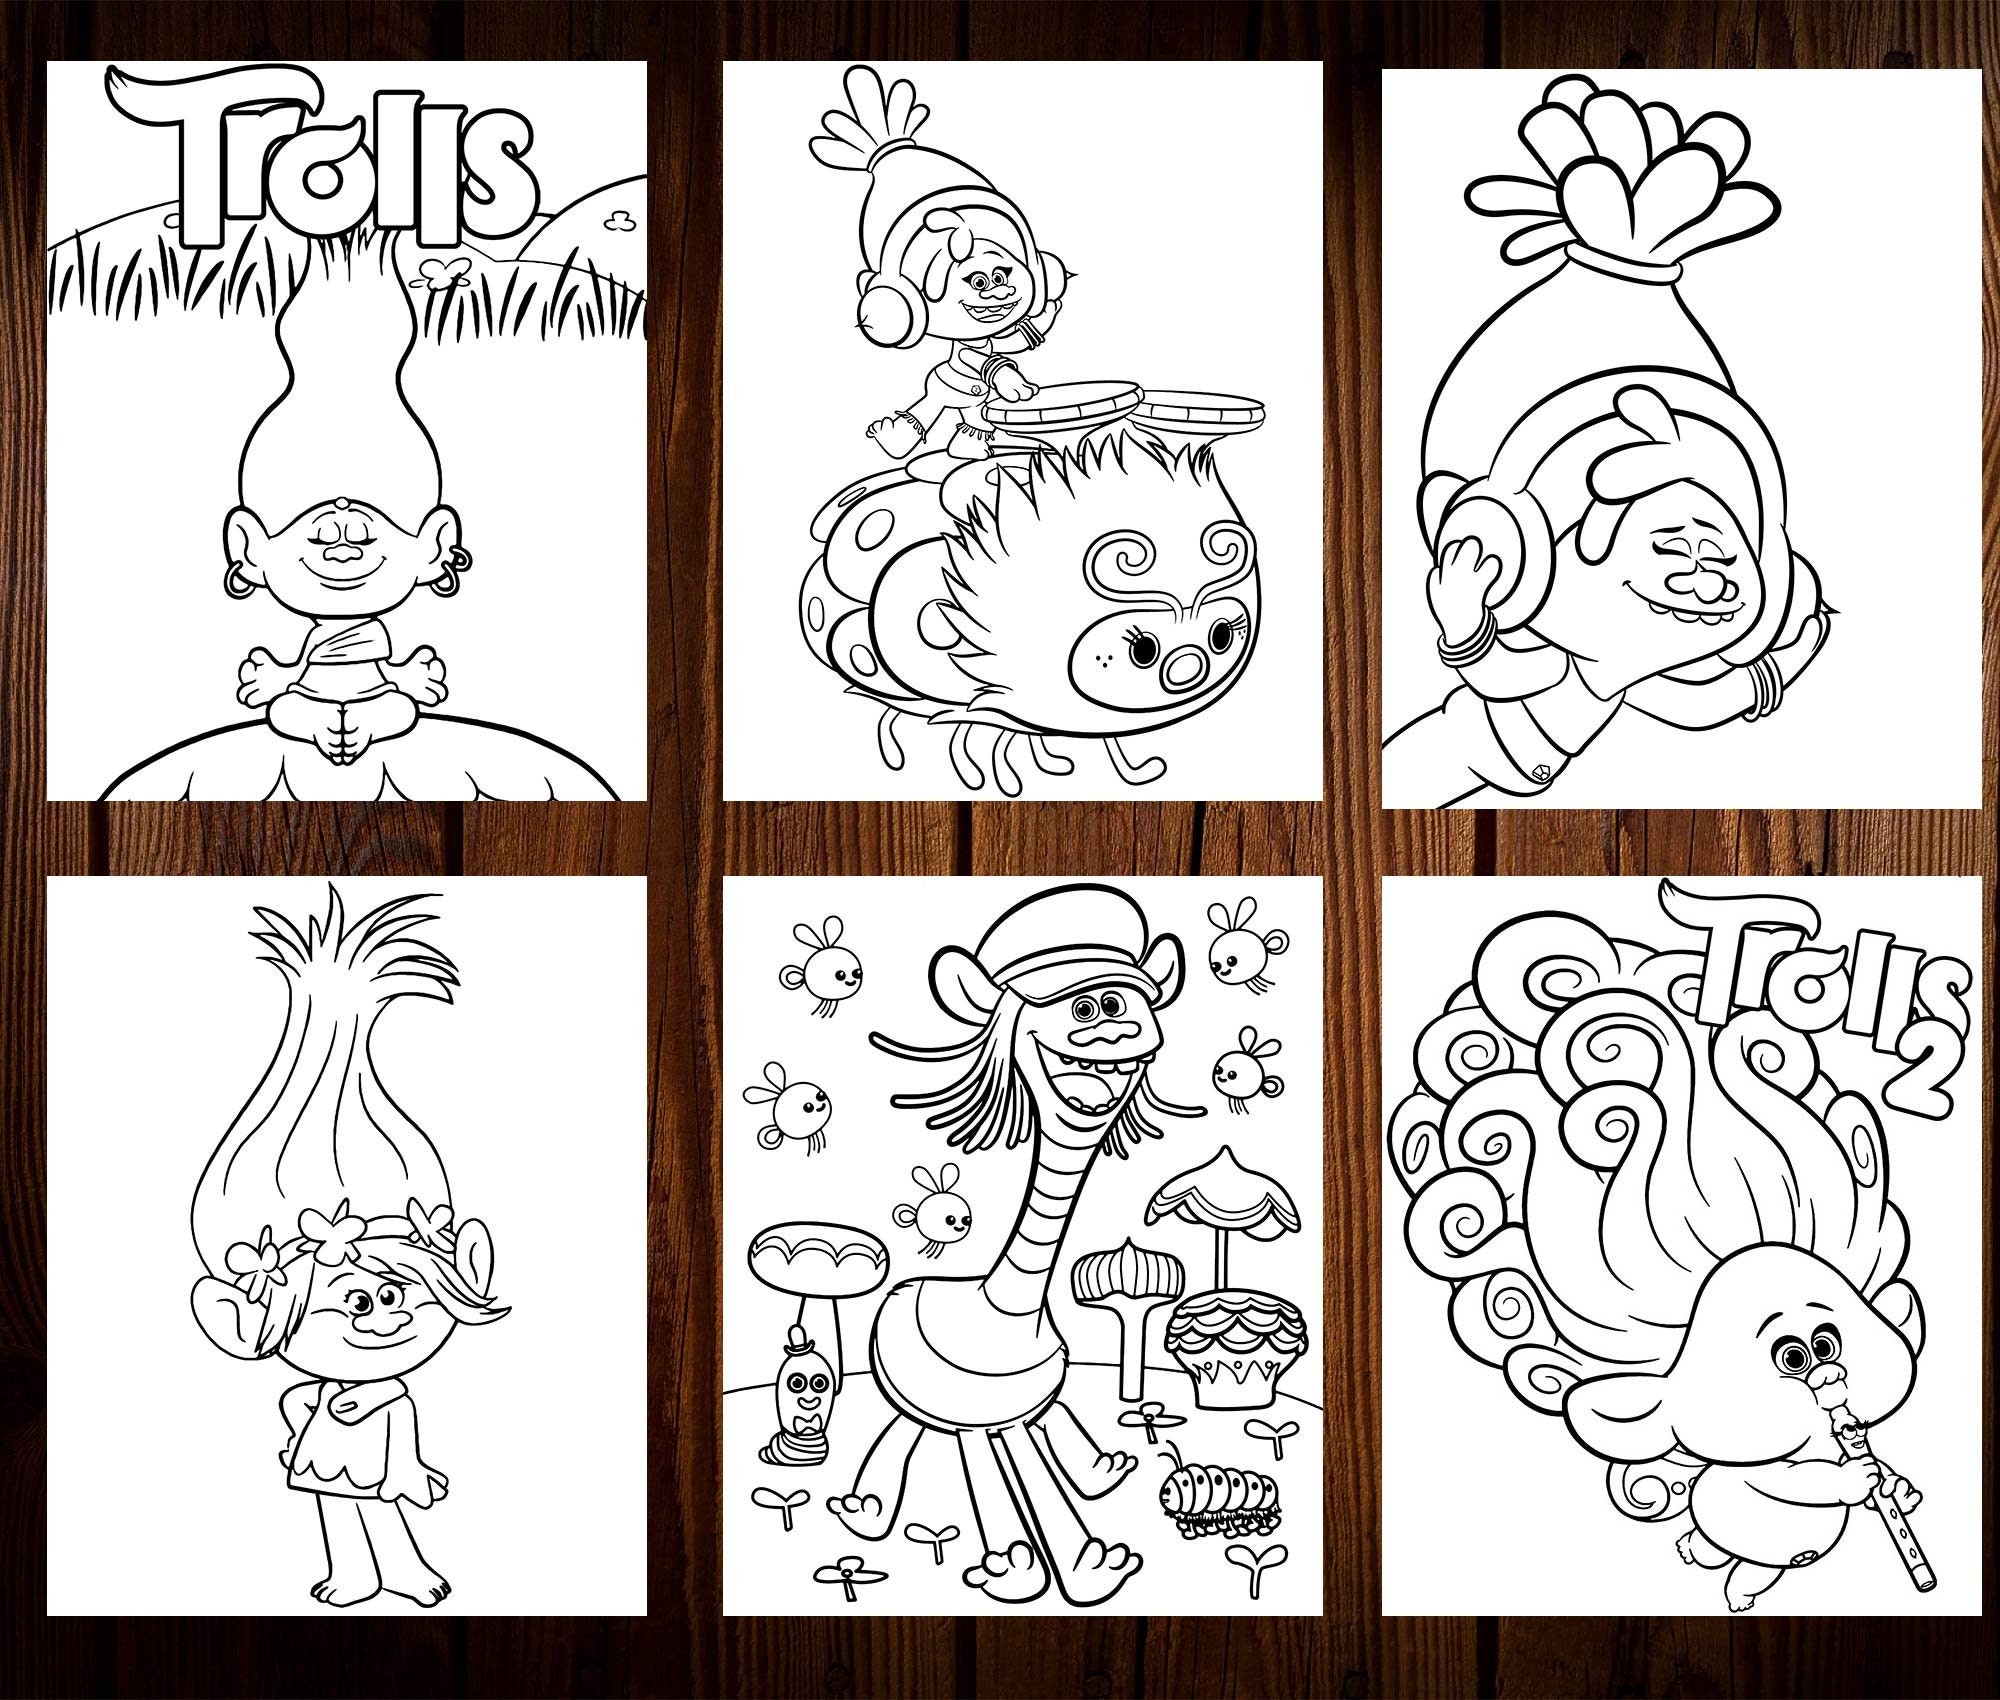 trolls coloring book for kids: Fantastic Trolls Coloring Book for Boys,  Girls, Toddlers, Preschoolers, Kids 3-8, 6-8 (Trolls Book) (Paperback)